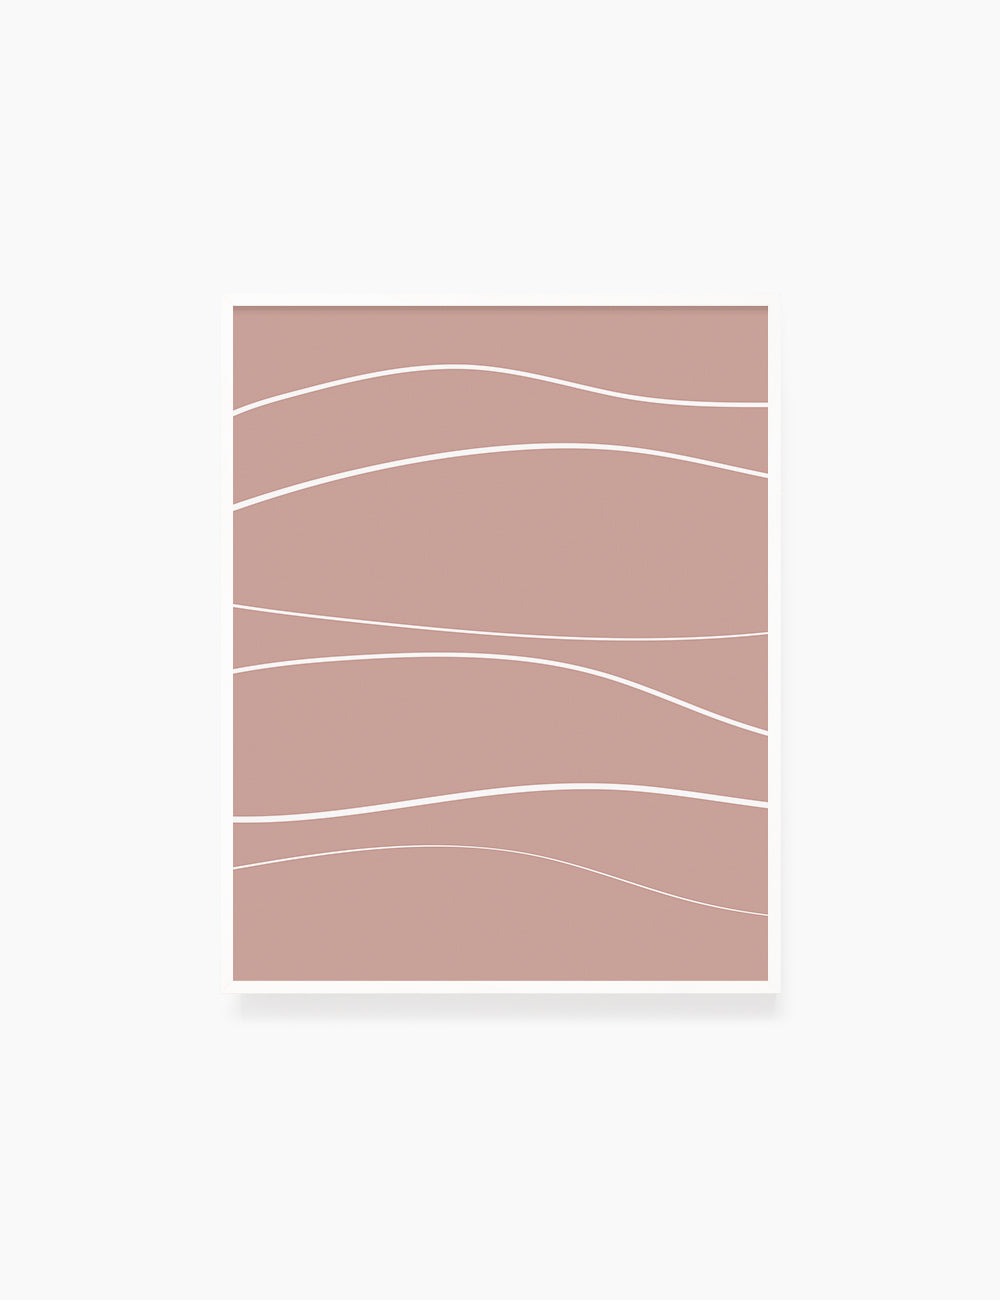 MINIMAL LINE ART. Abstract Waves. Boho. Blush. Rose. Pale Red. Printable Wall Art Illustration. - PAPER MOON Art & Design